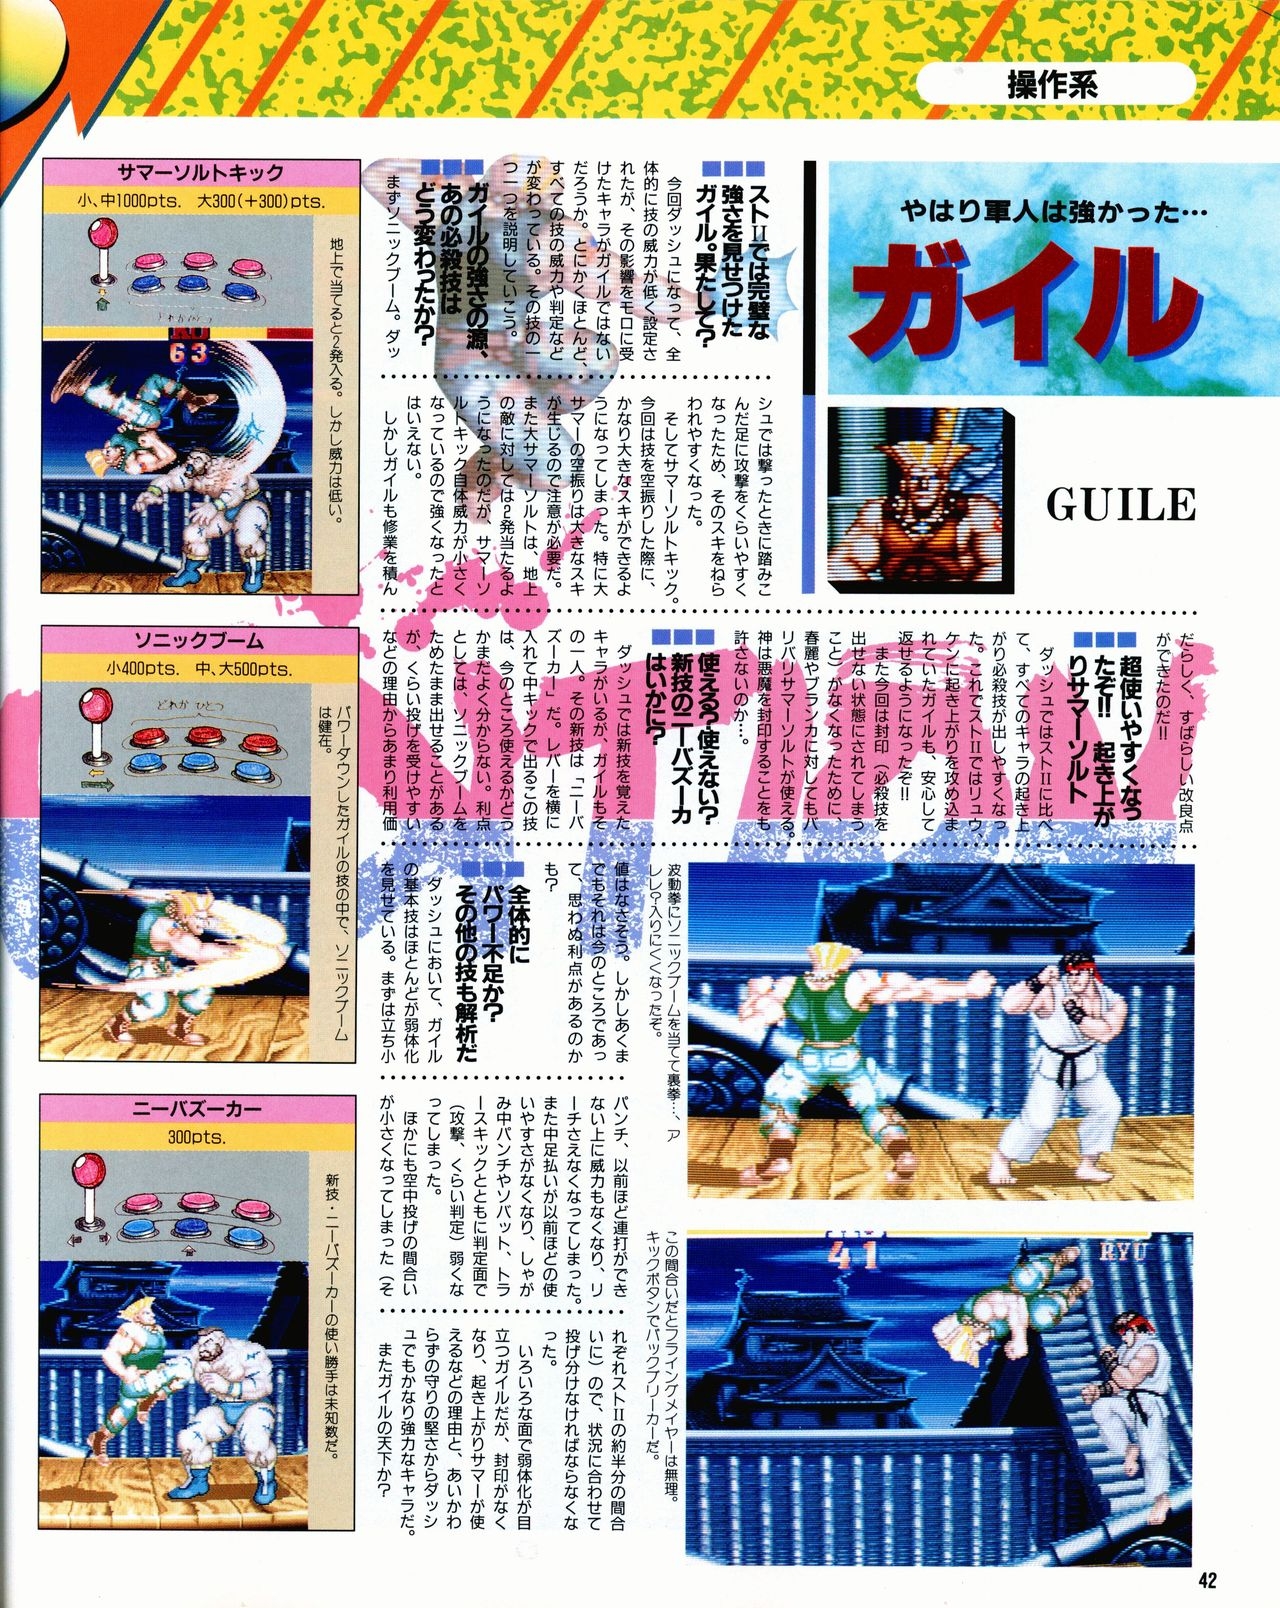 Street Fighter II Dash - Gamest special issue 77 43